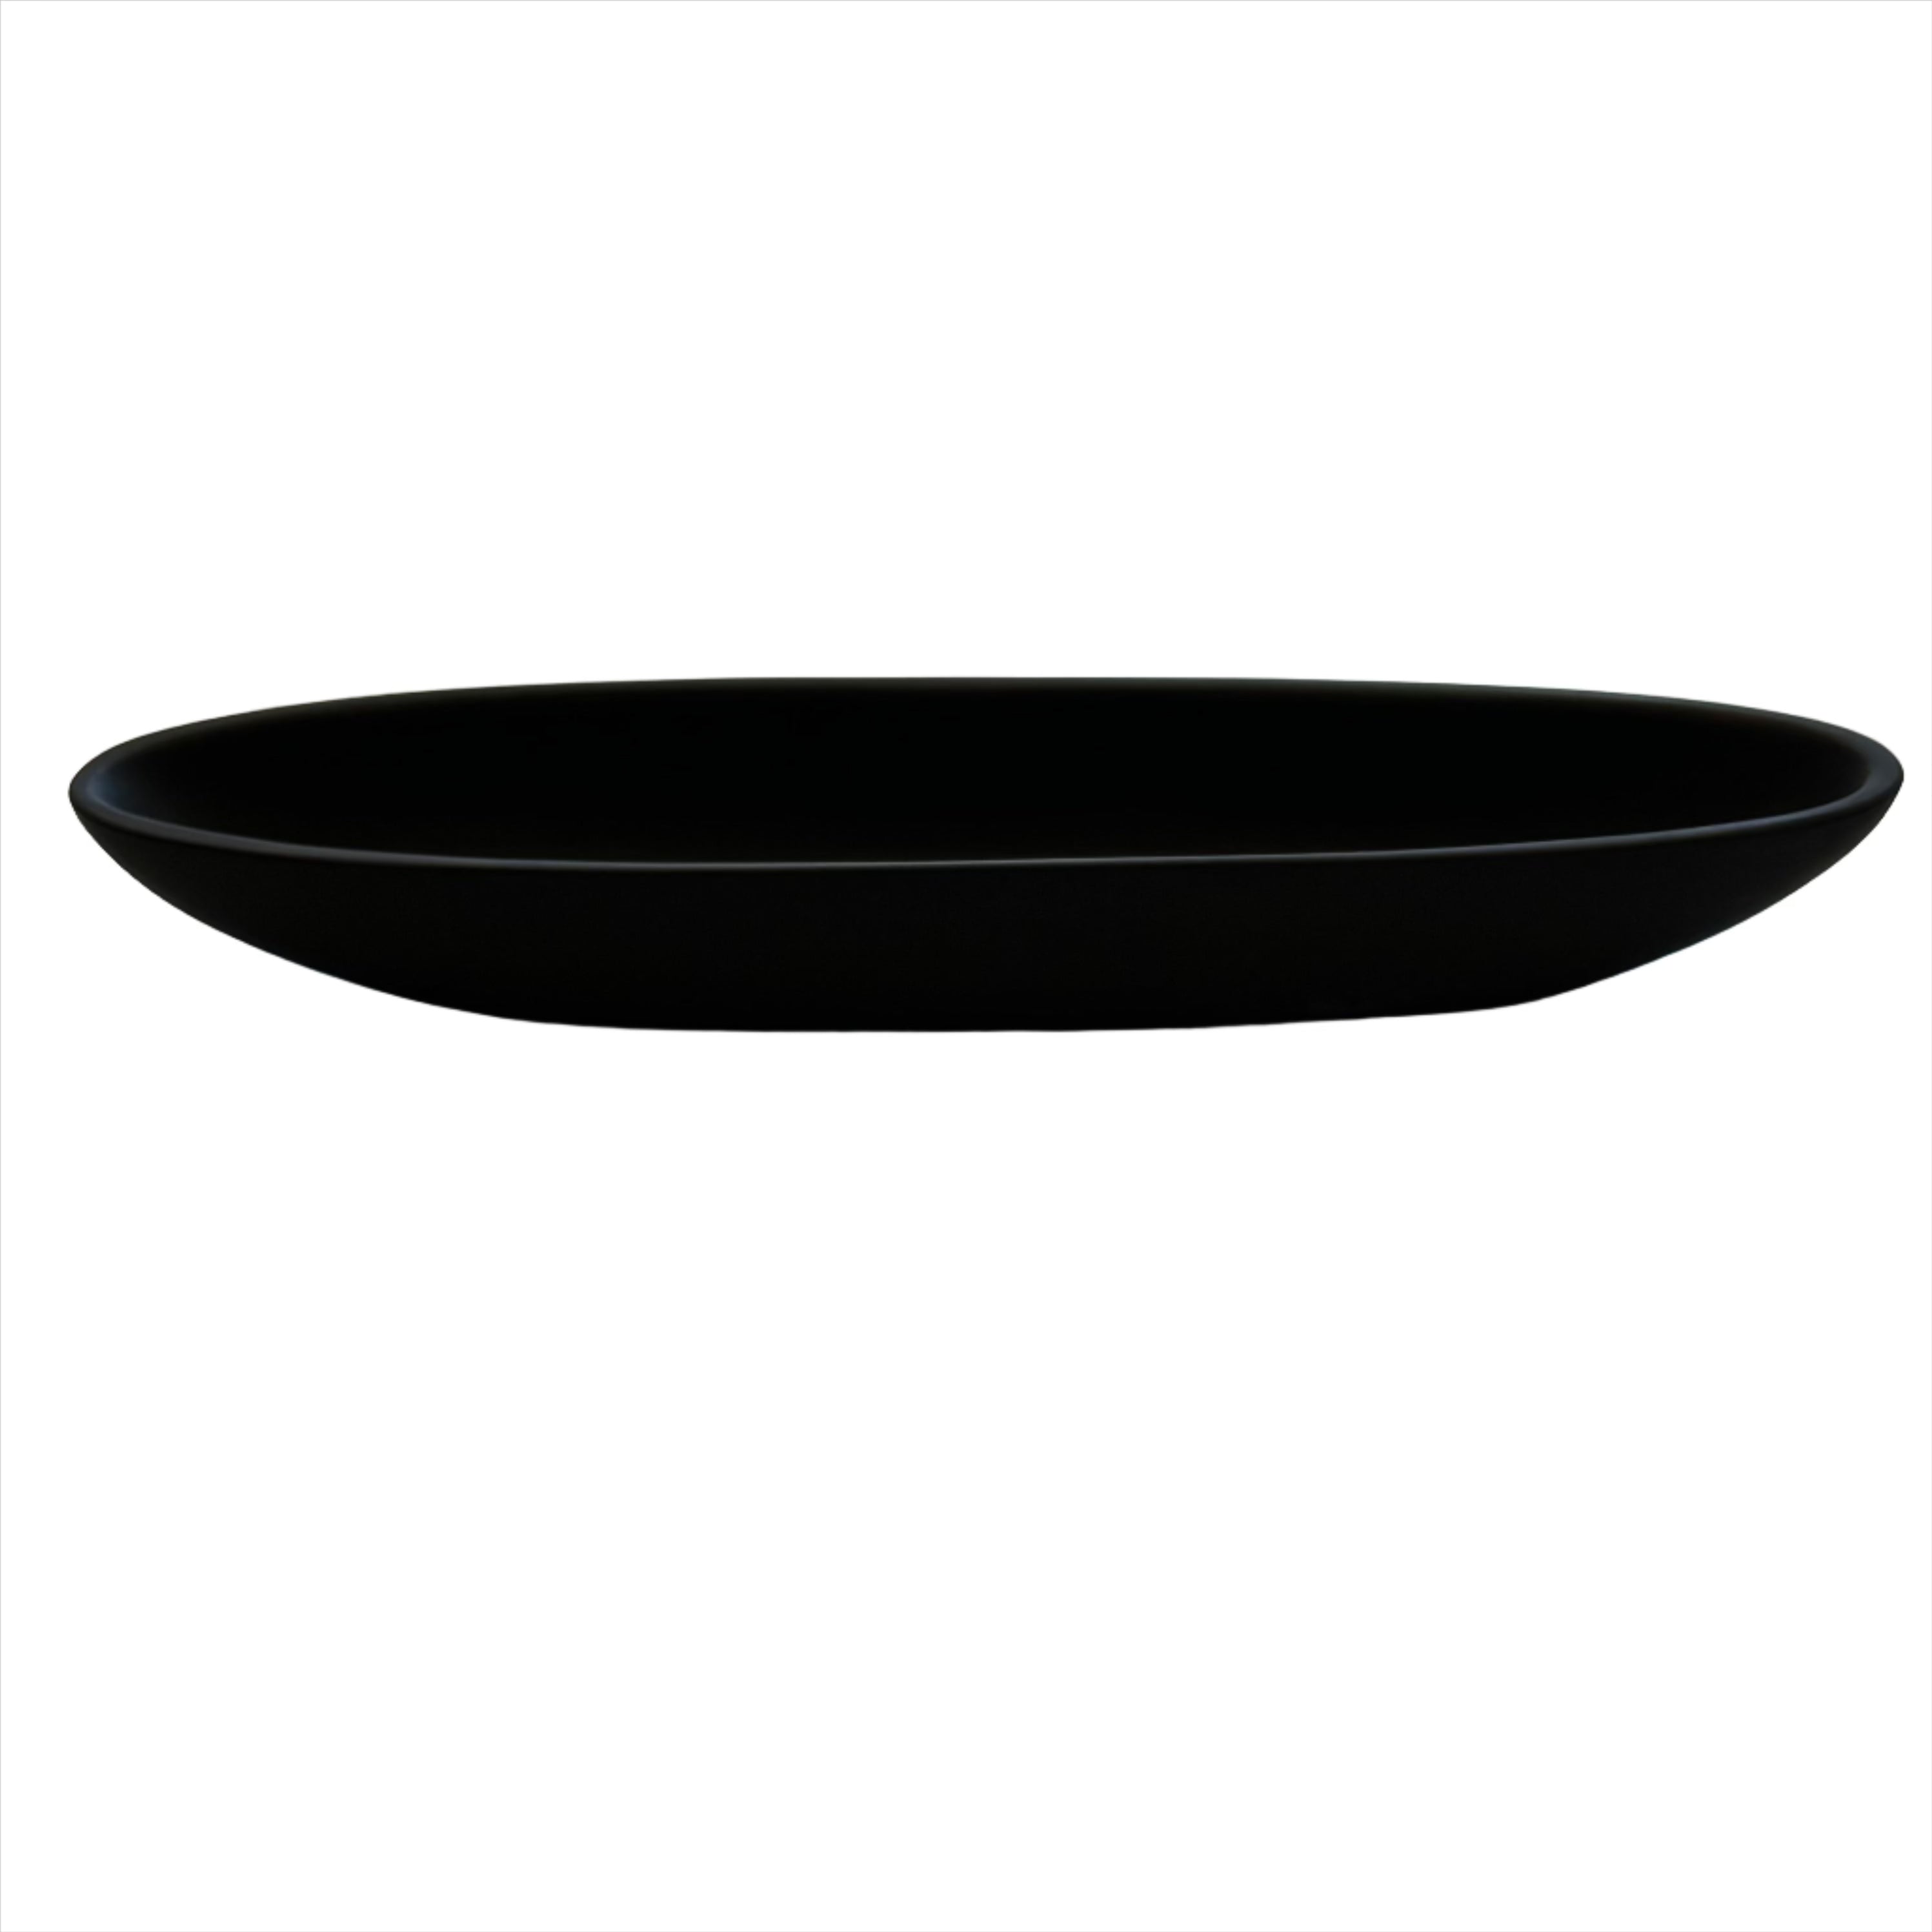 Small Resin Boat Bowl - Black